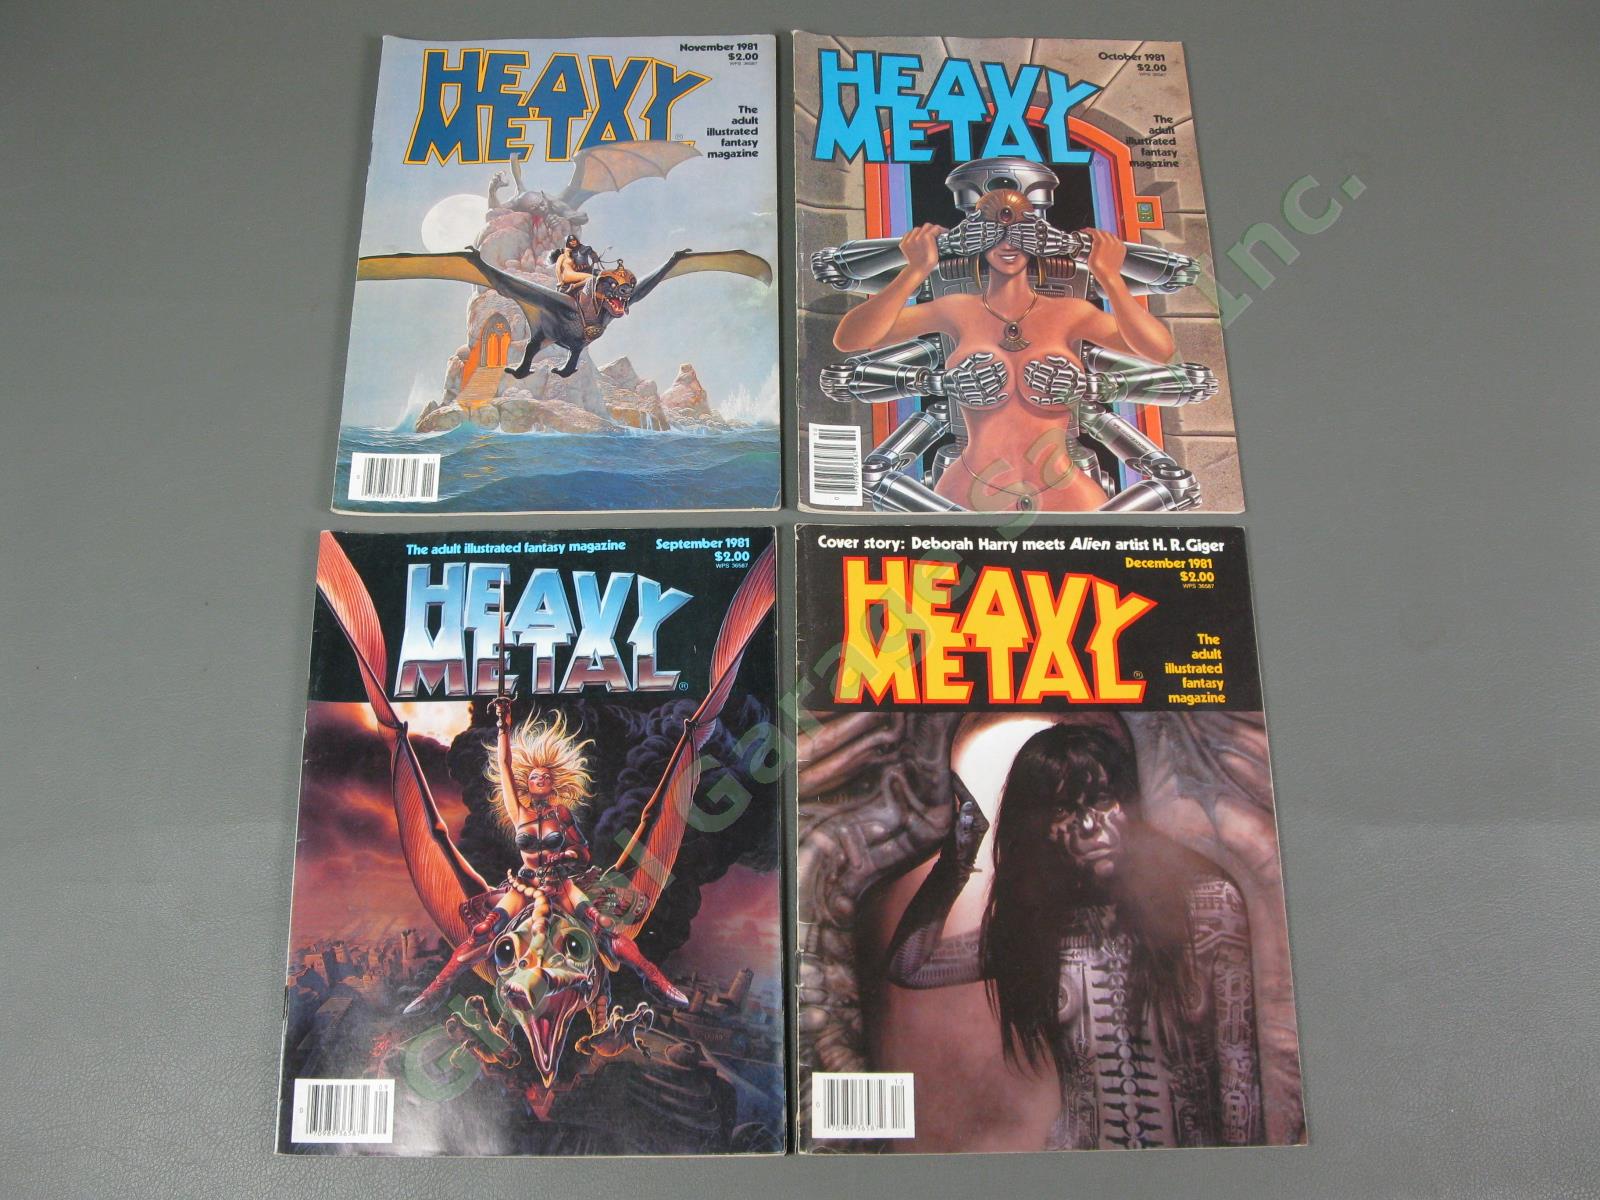 15 1981-82 Heavy Metal Adult Illustrated Fantasy Comic Magazine Issue Series Lot 2